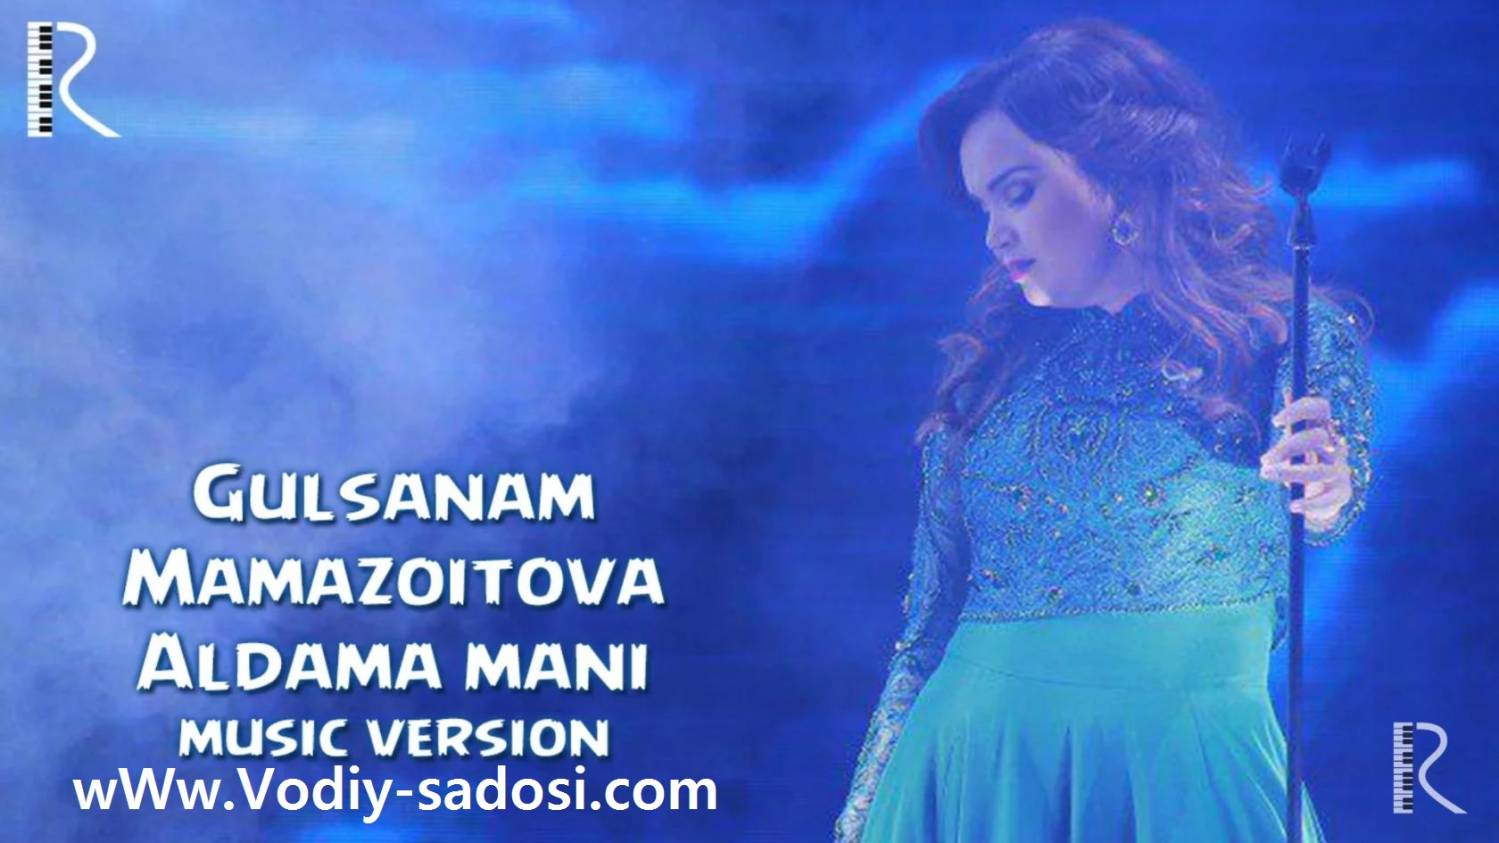 Gulsanam Mamazoitova - Aldama mani (music version) смотреть онлайн